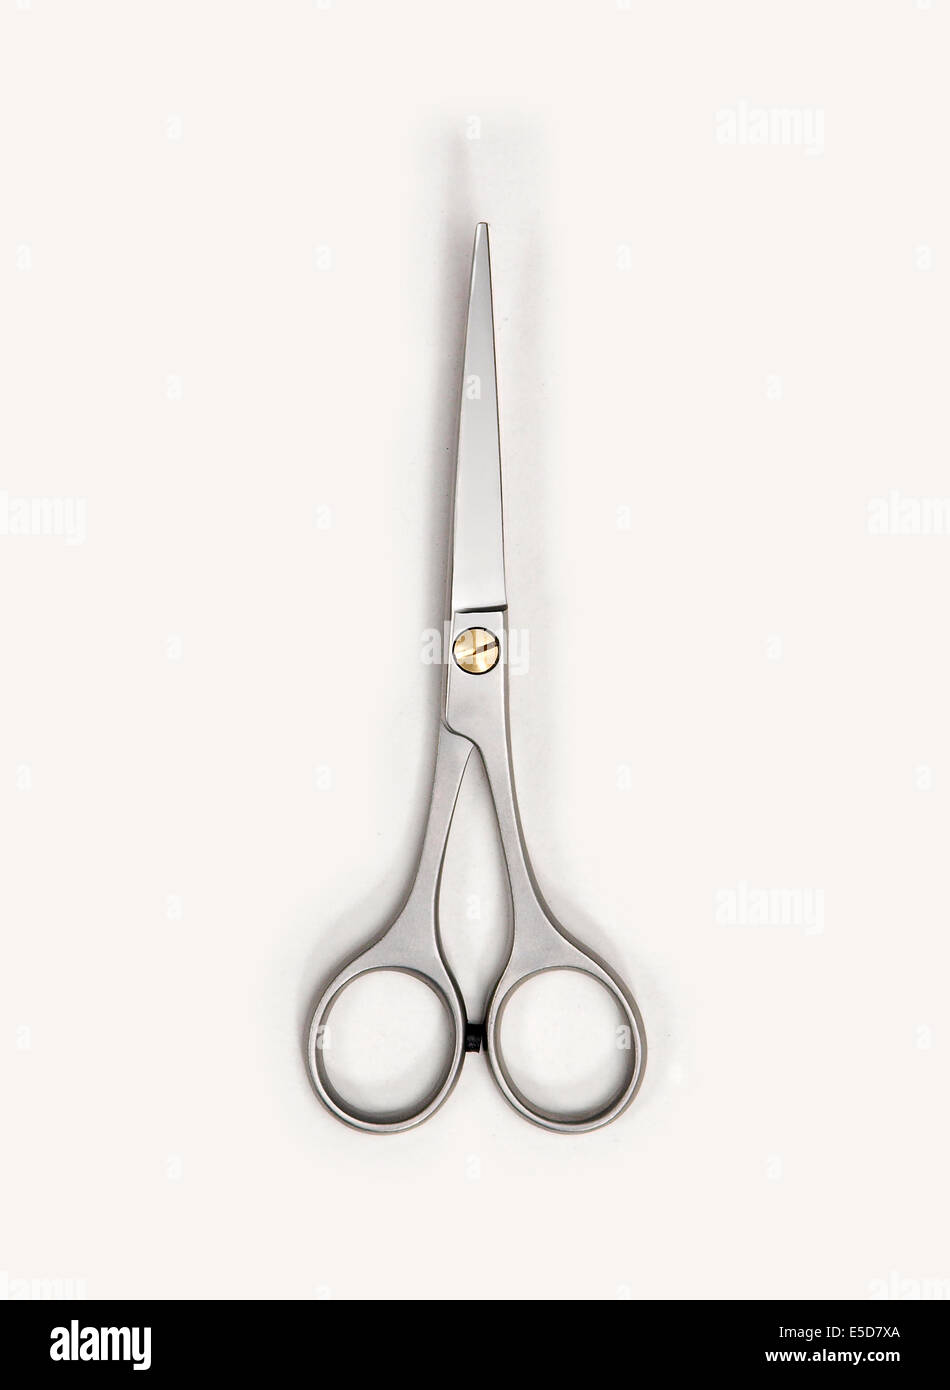 Hairdresser scissors Stock Photo